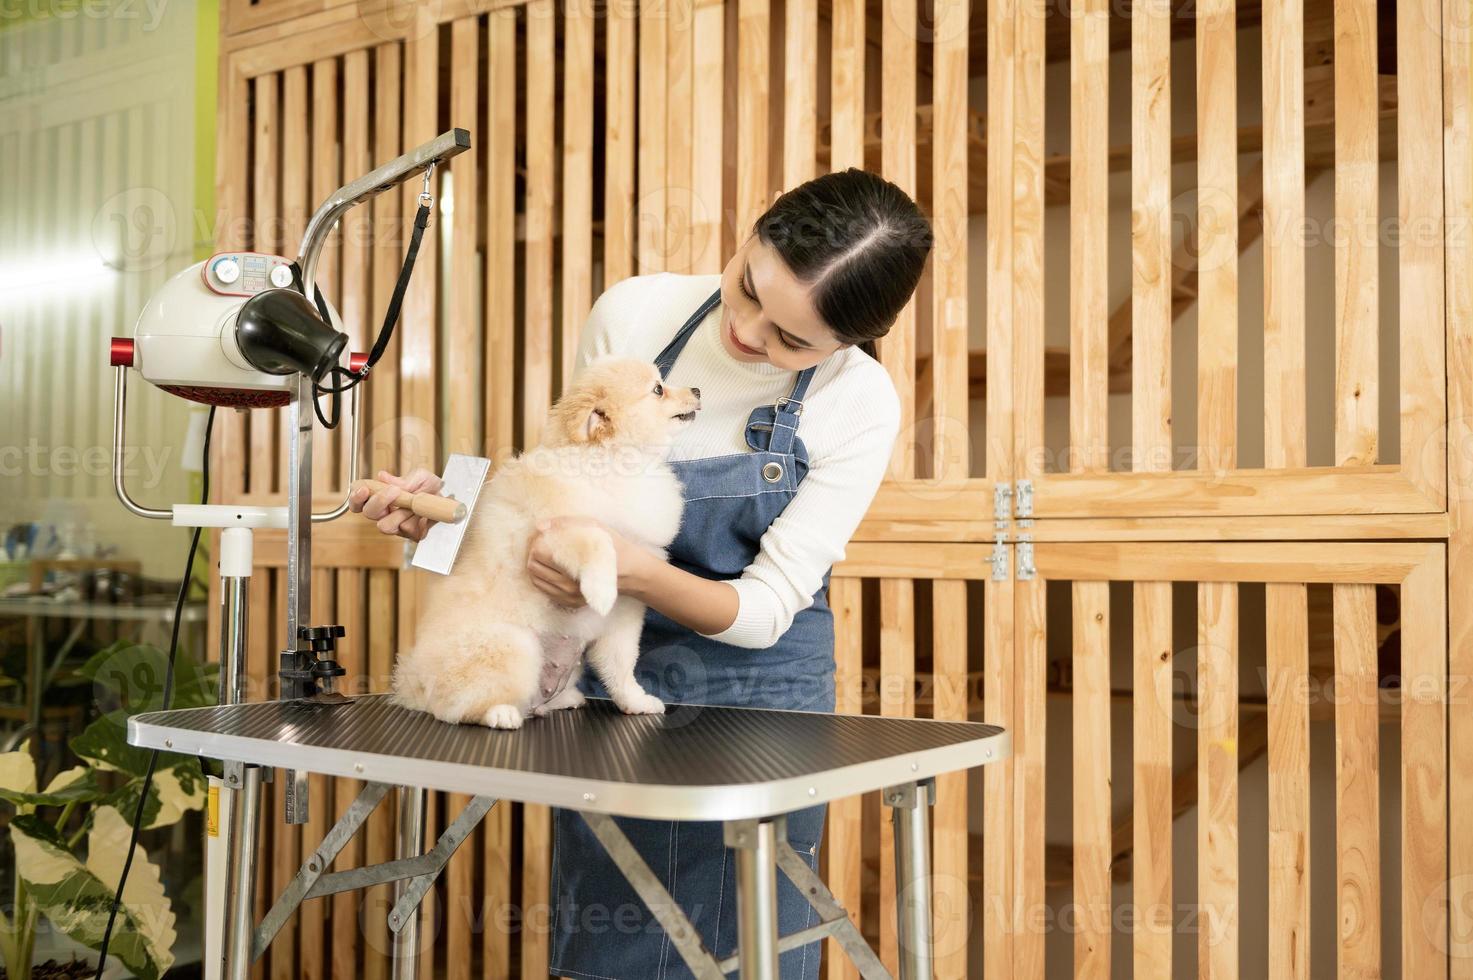 hembra profesional peluquero peinada perro piel a mascota spa aseo salón foto